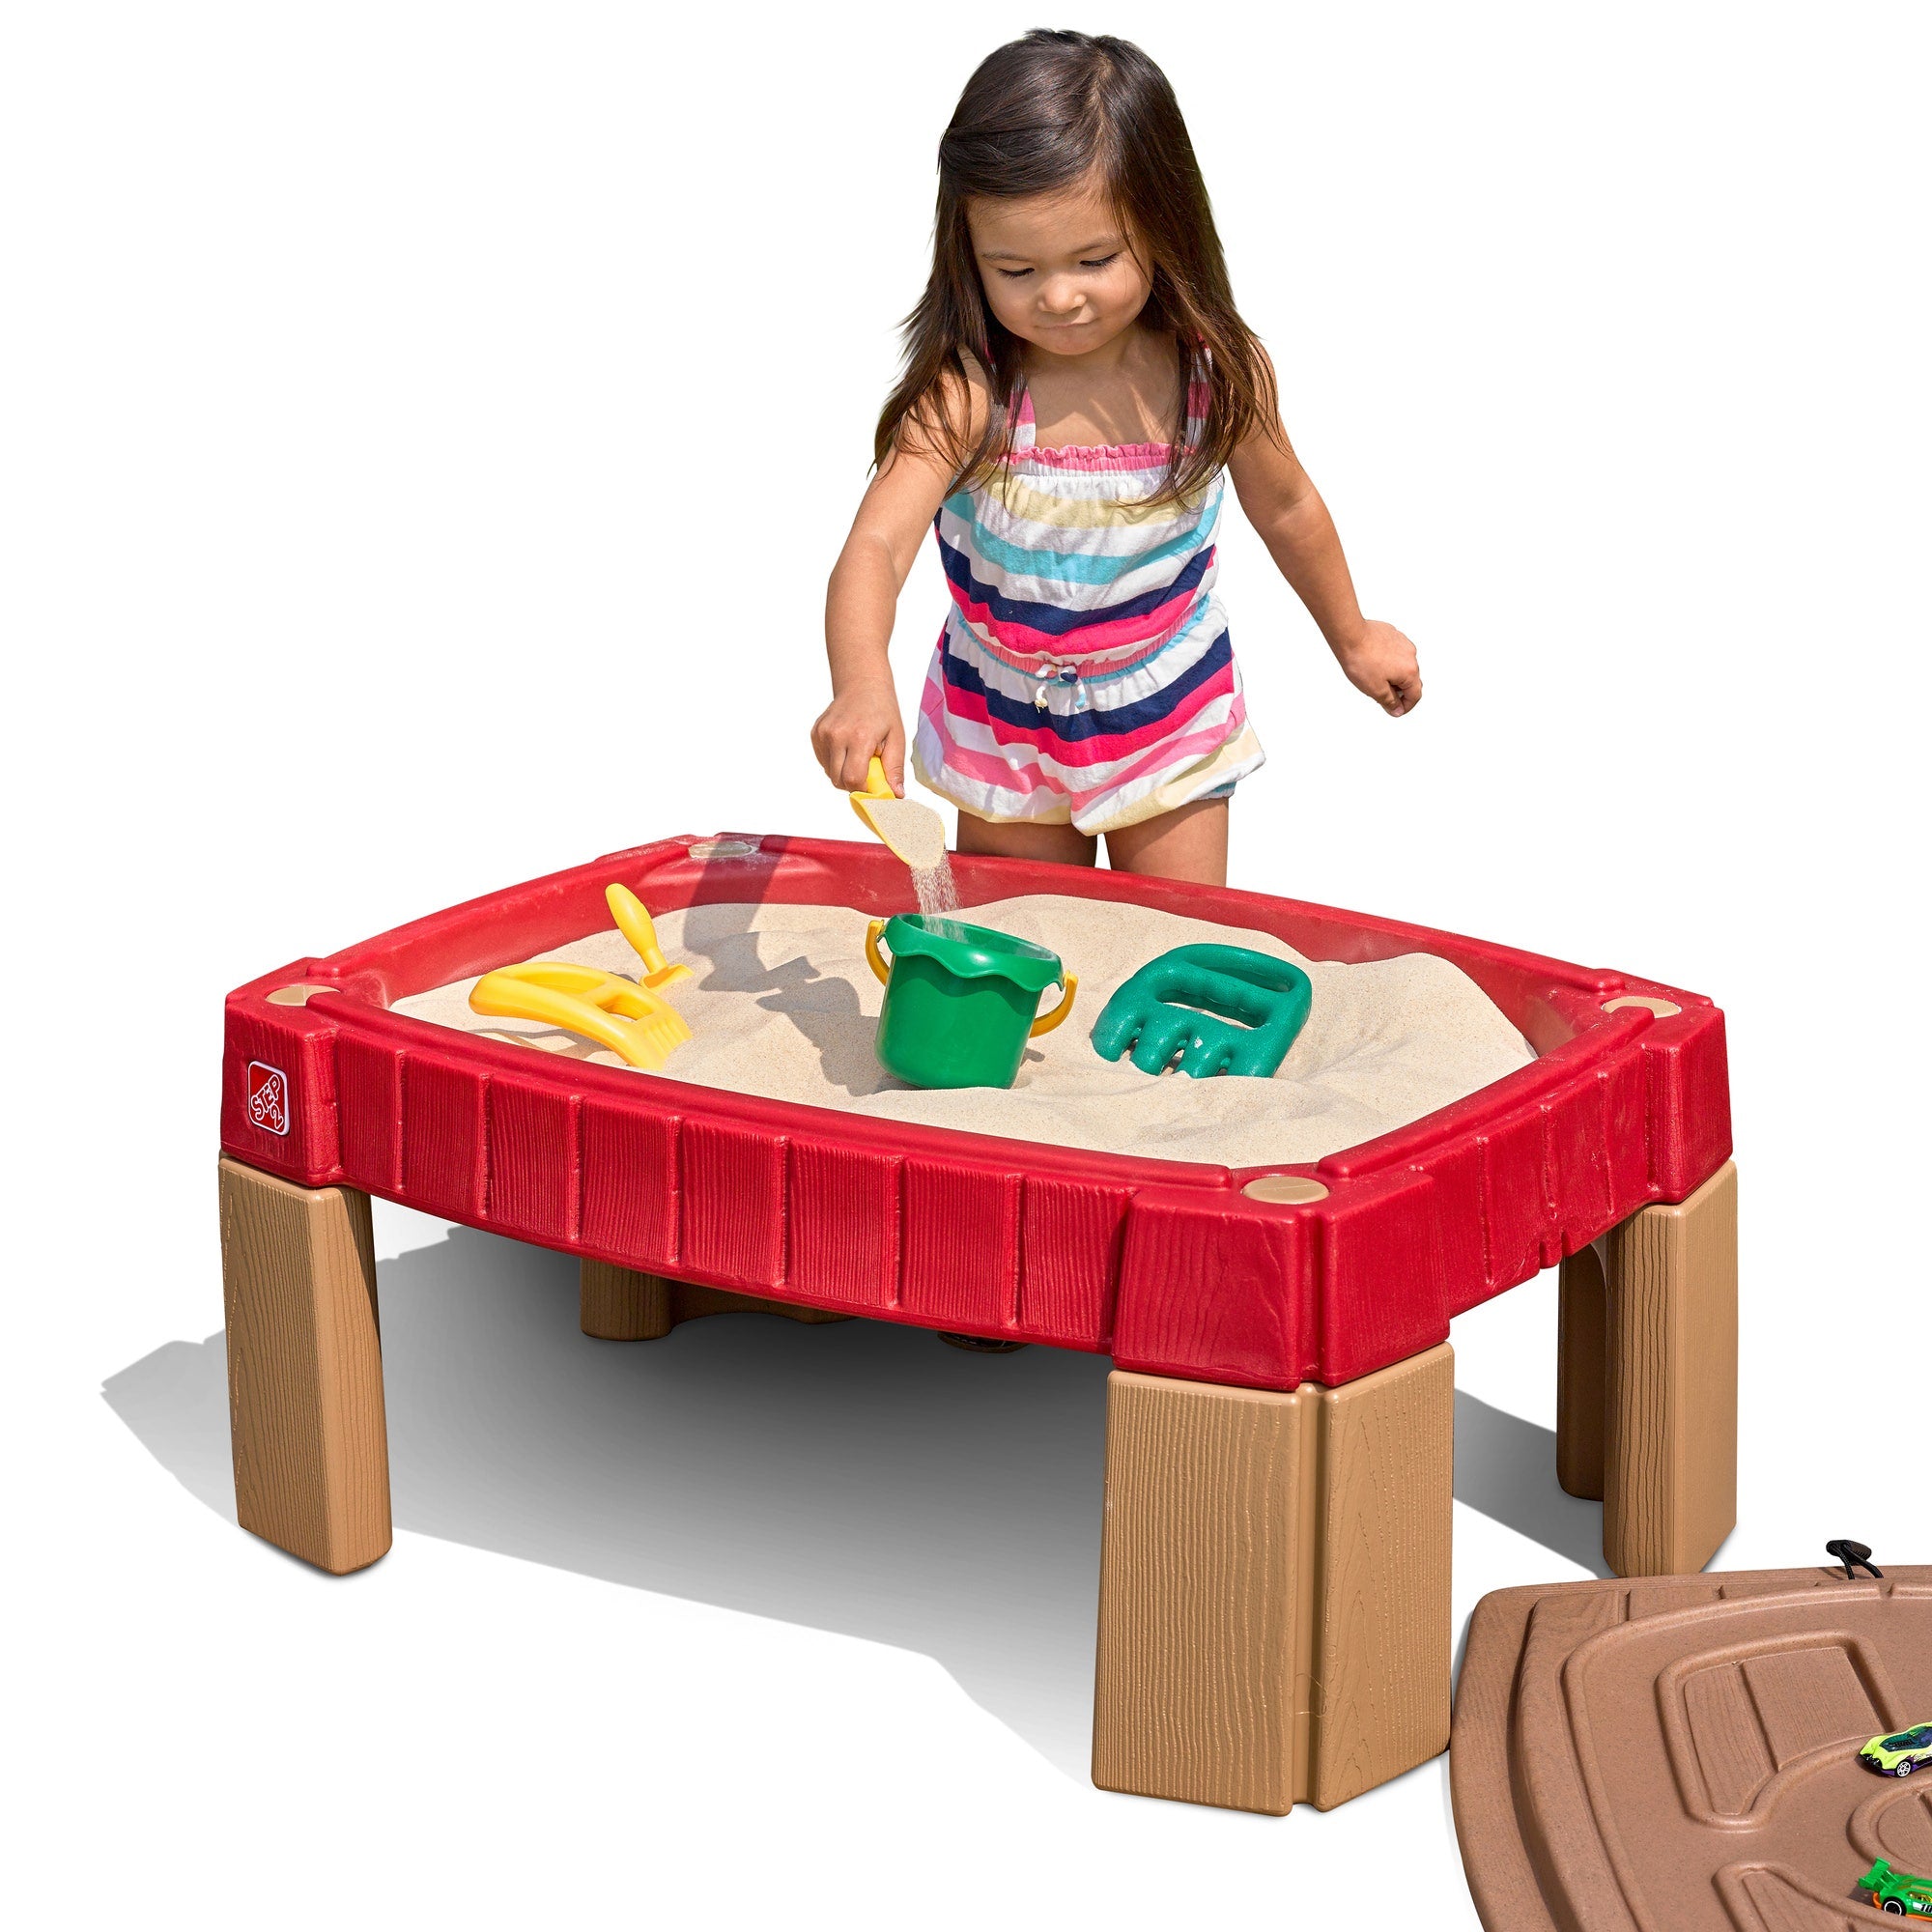 Naturally Playful® Sandbox™ from Step2